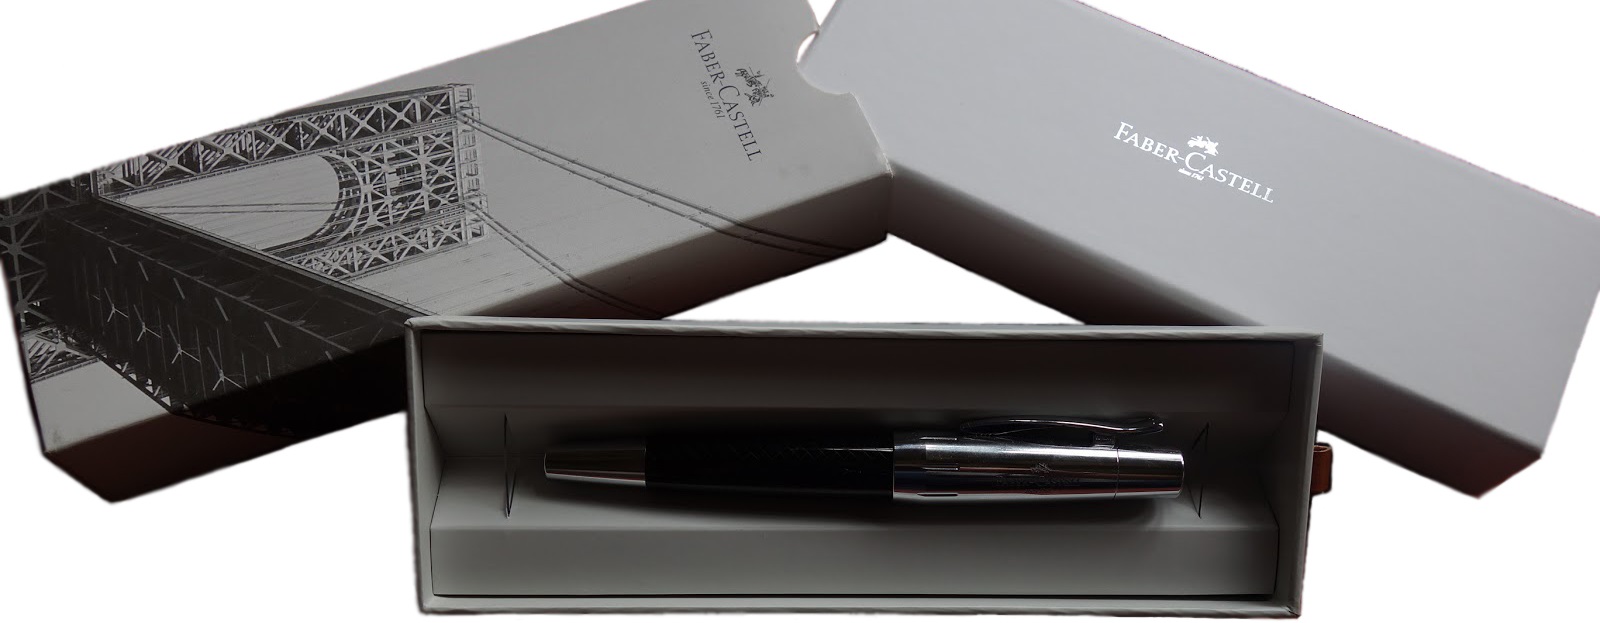 Fountain Pen Review: Faber-Castell Basic Fountain Pen